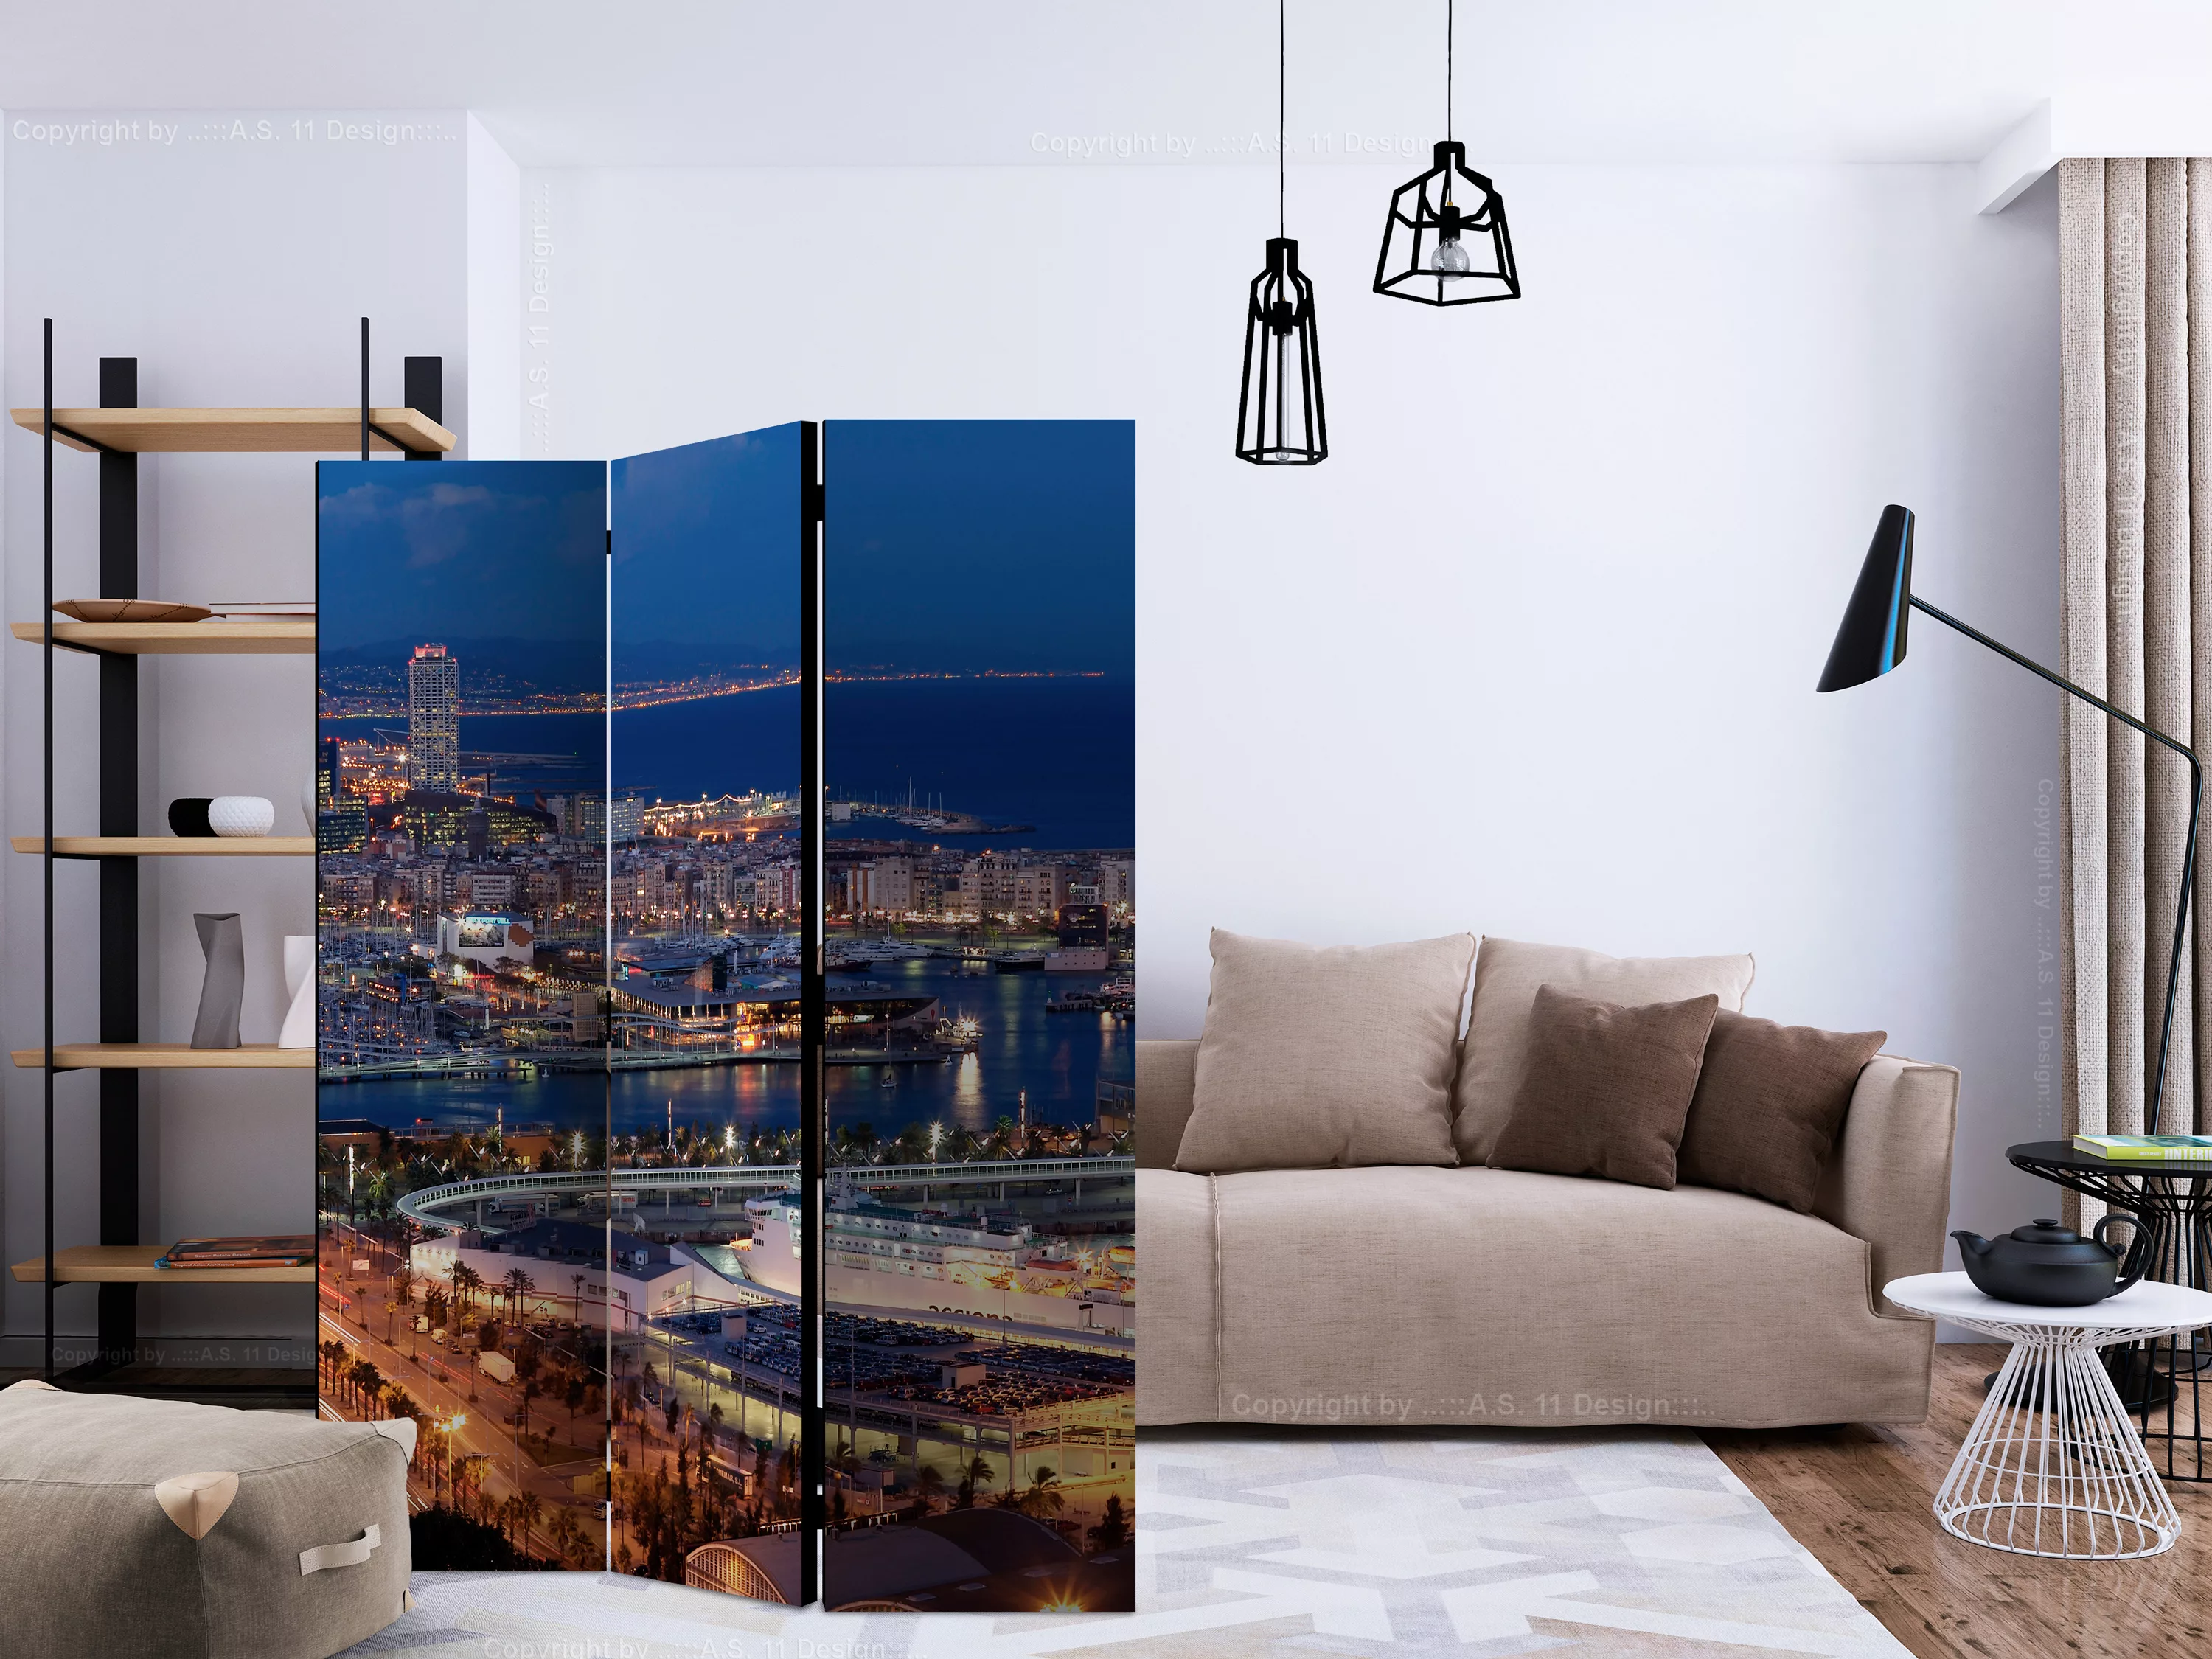 3-teiliges Paravent - Illuminated Barcelona [room Dividers] günstig online kaufen